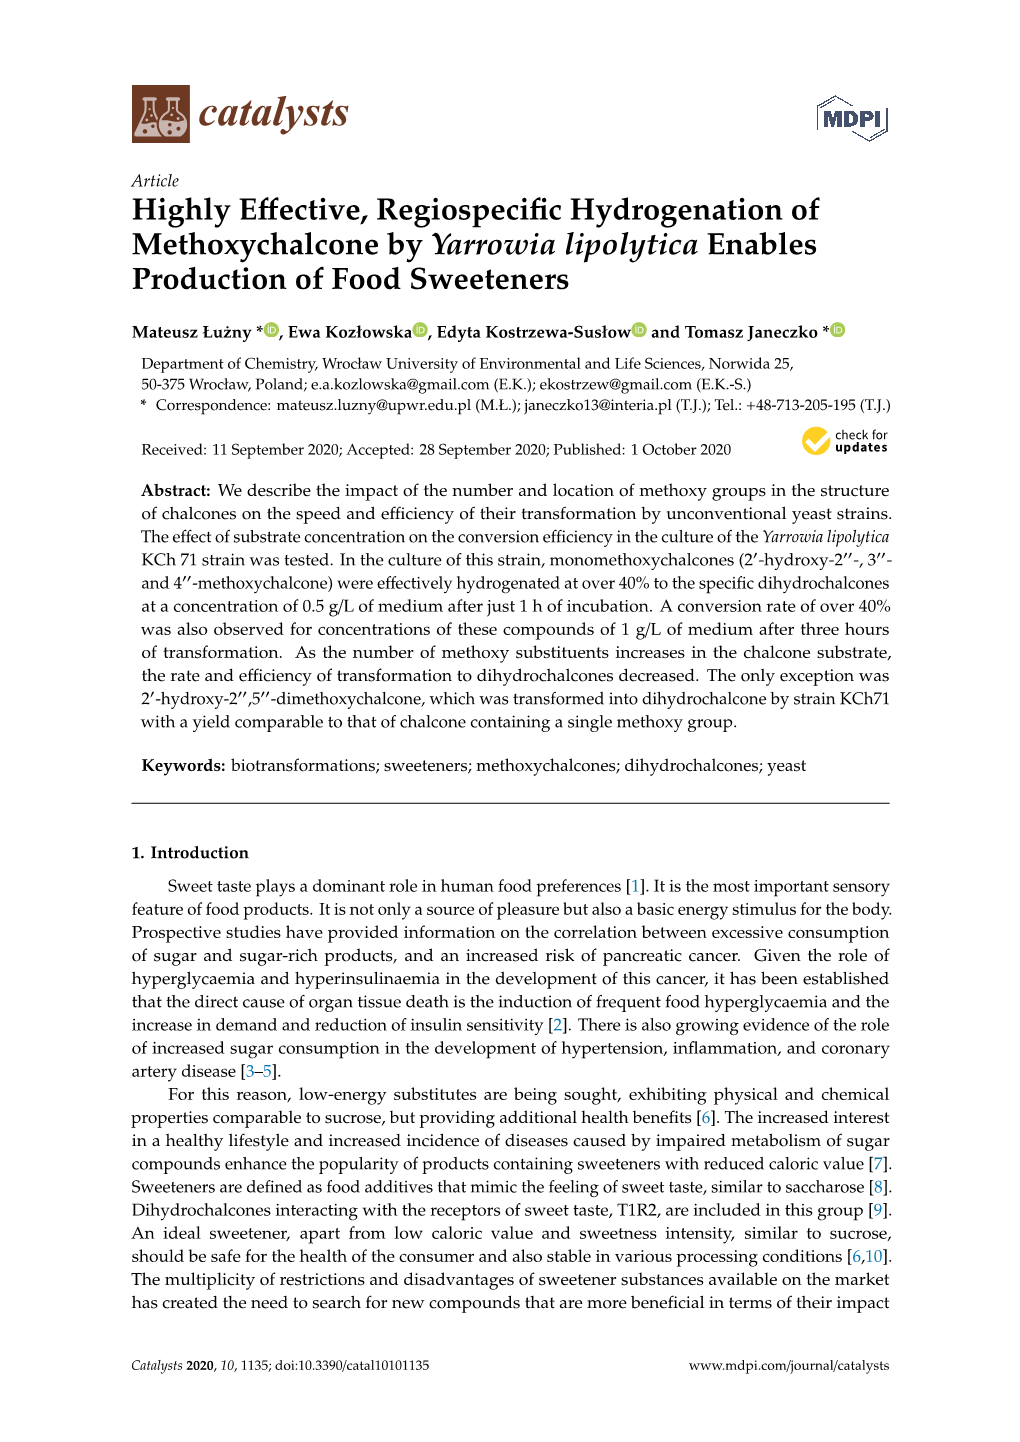 Highly Effective, Regiospecific Hydrogenation of Methoxychalcone